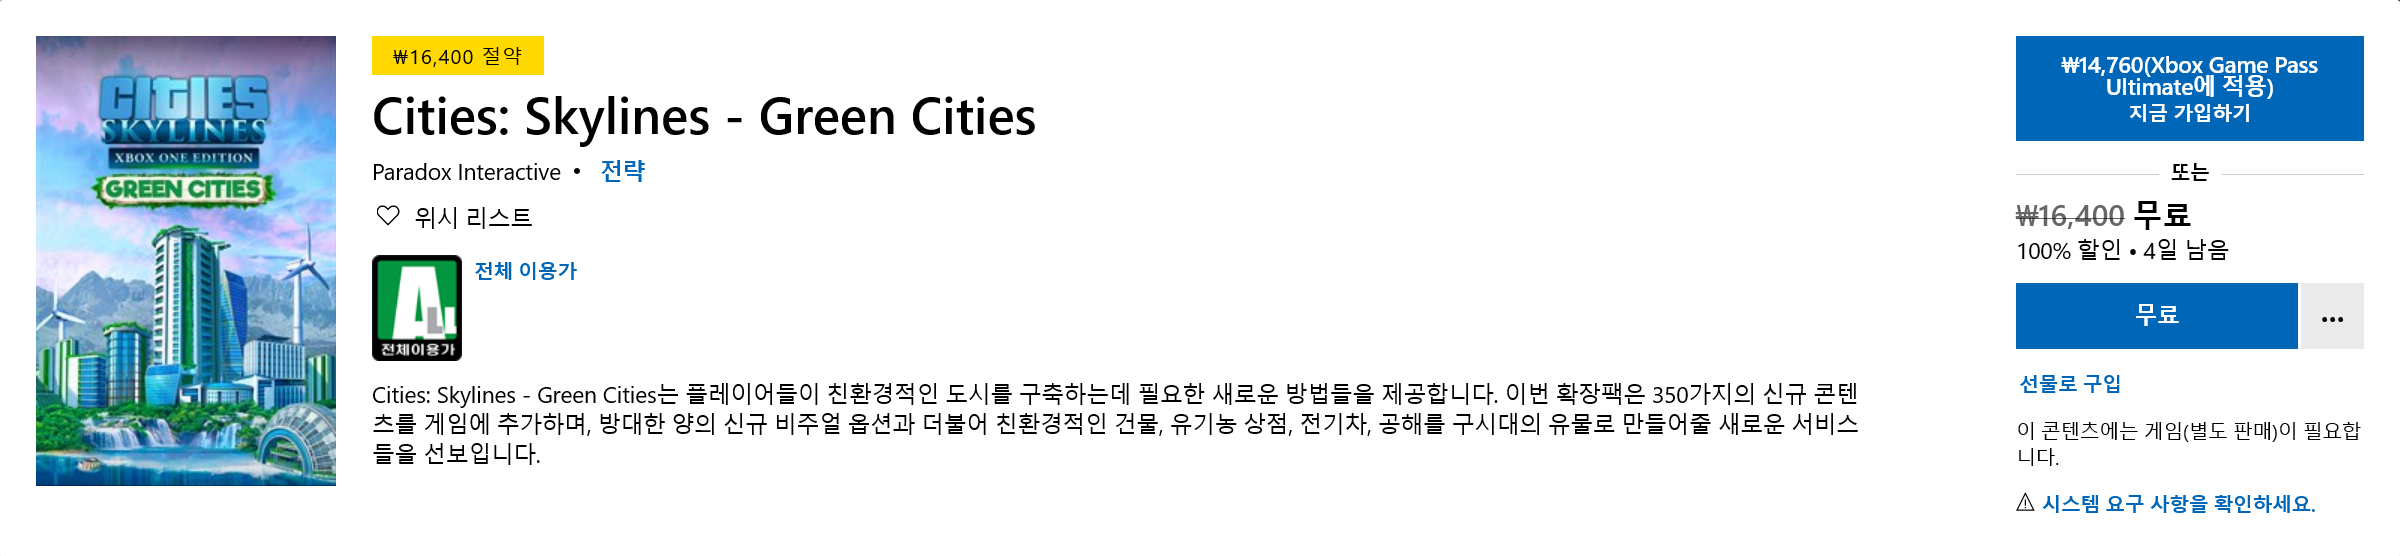 Screenshot_2020-06-23 Cities Skylines - Green Cities 구매 - Microsoft Store ko-KR.png